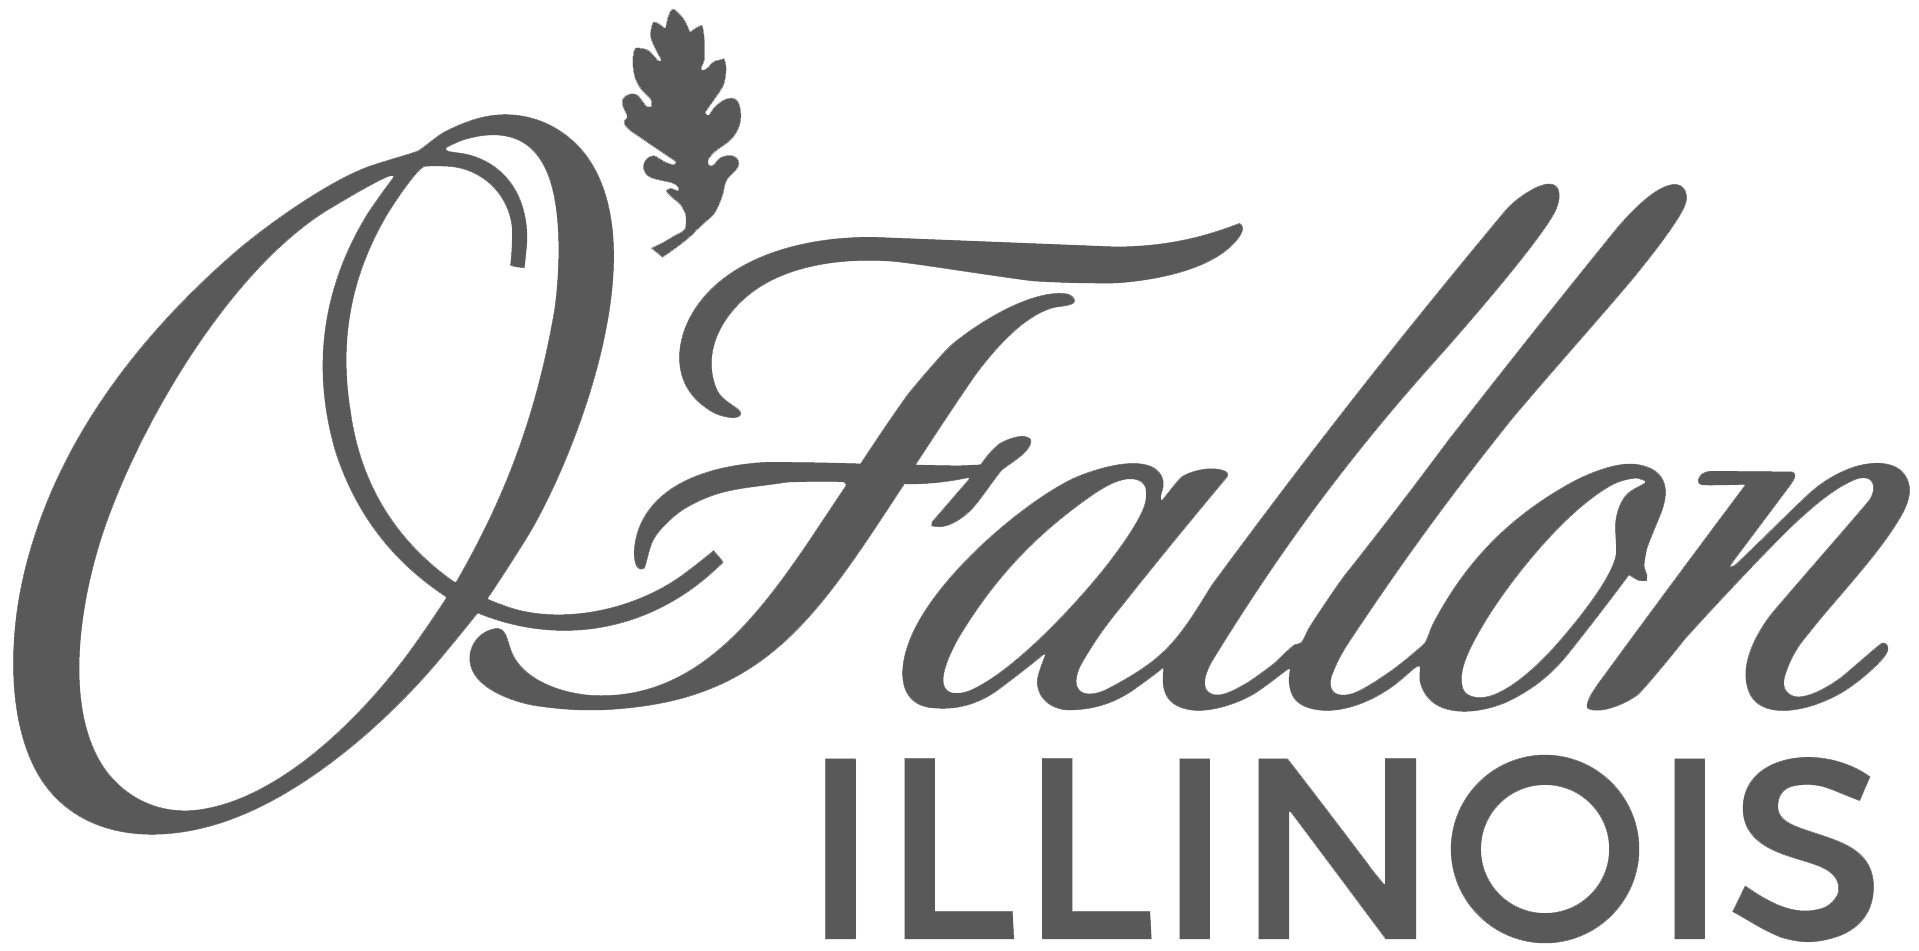 Ofallon-Illinois-logo-fullcolor-digital.jpg